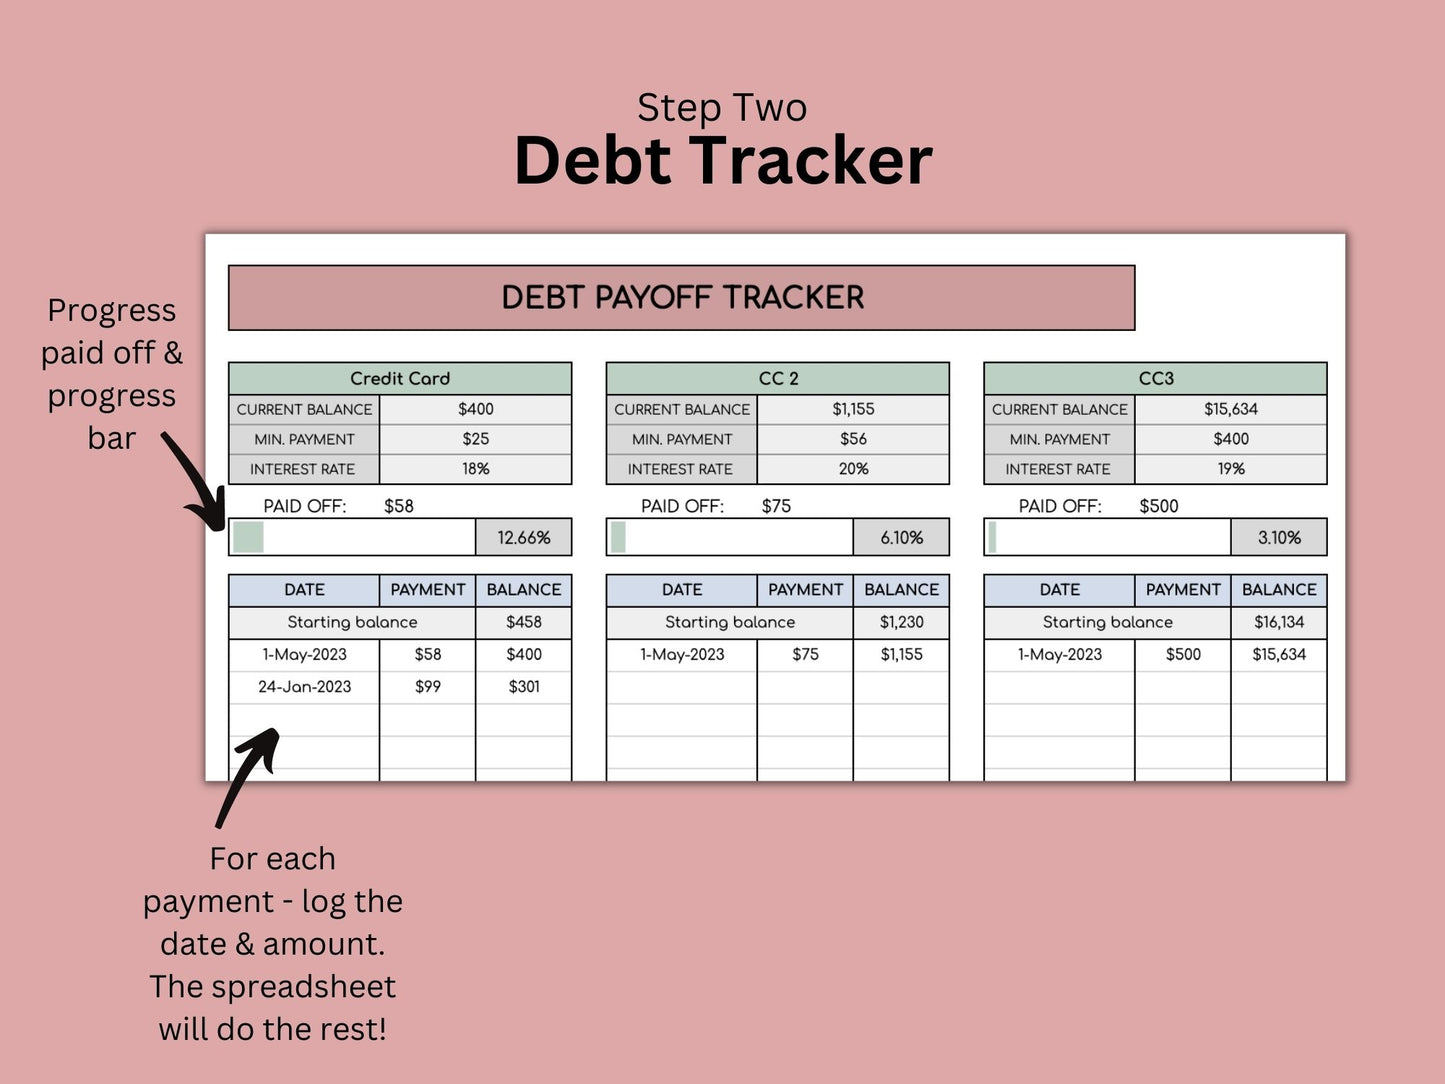 Debt Payoff Calculator & Tracker | Google Sheets Template